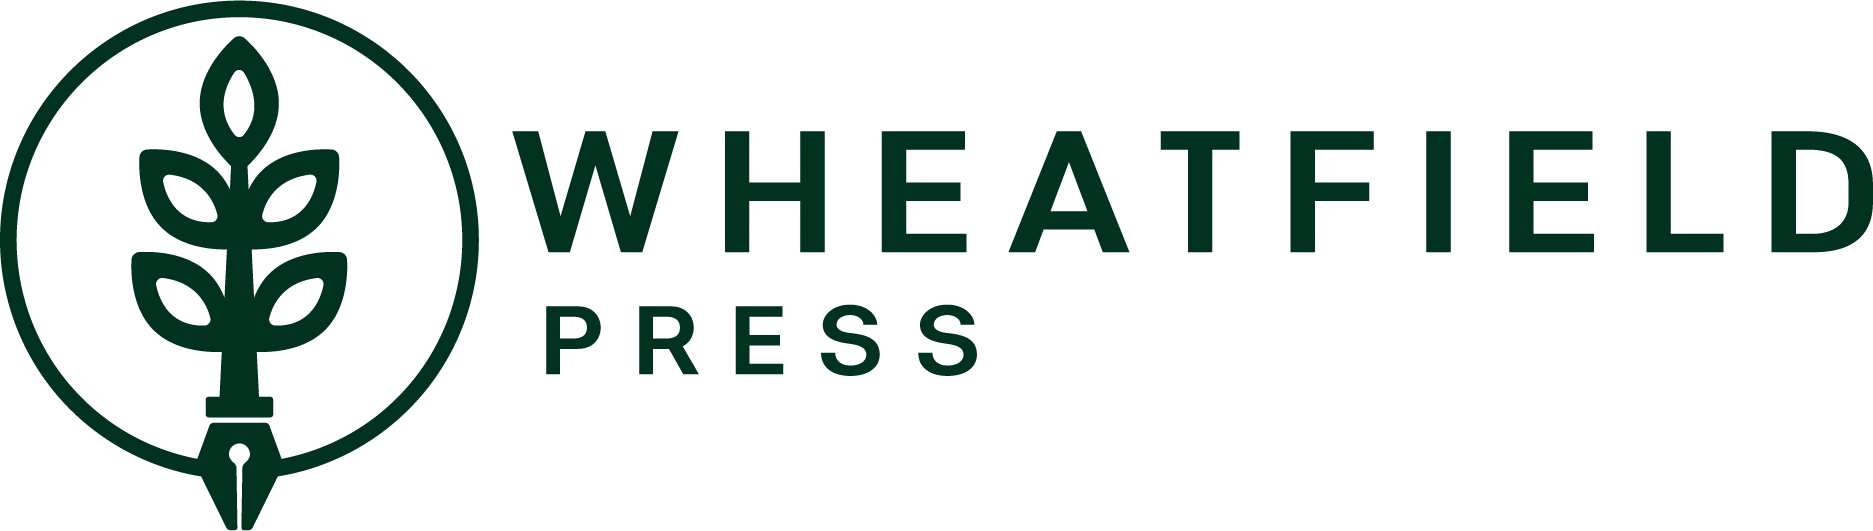 Wheatfield Press